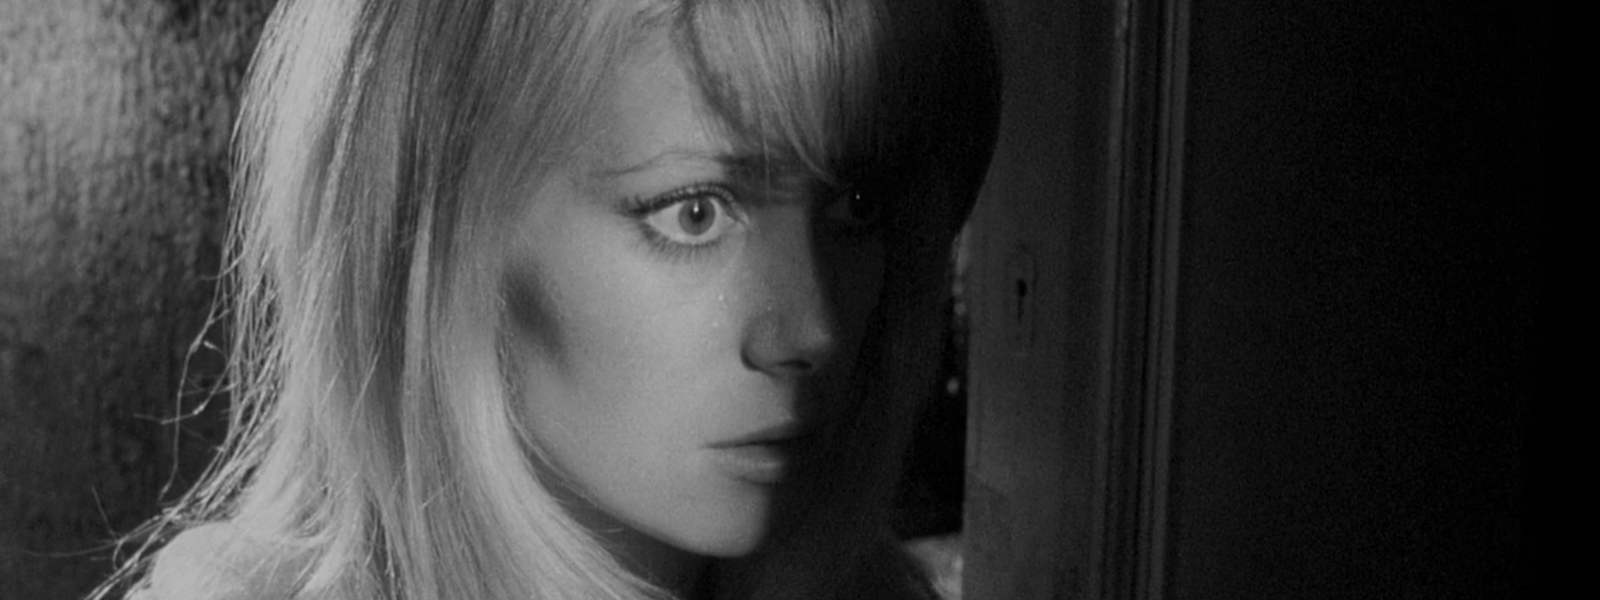 Catherine Deneuve in Repulsion film Roman Polanski, uncanny, woman's face is submerged in shadow